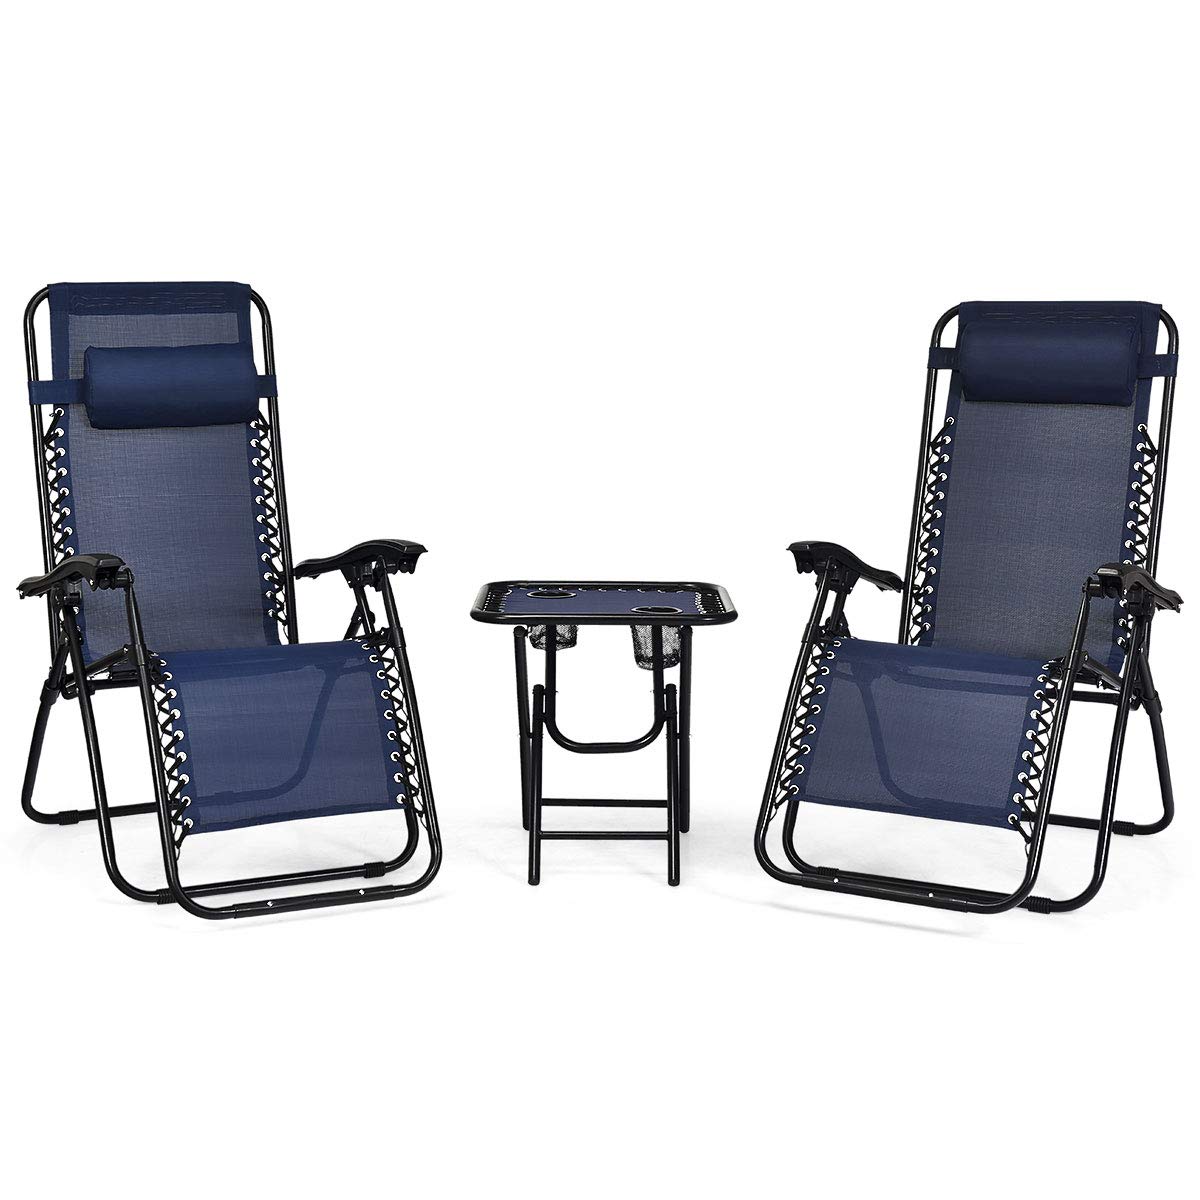 Giantex 3 PCS Zero Gravity Chair Patio Chaise Lounge Chairs, Beige